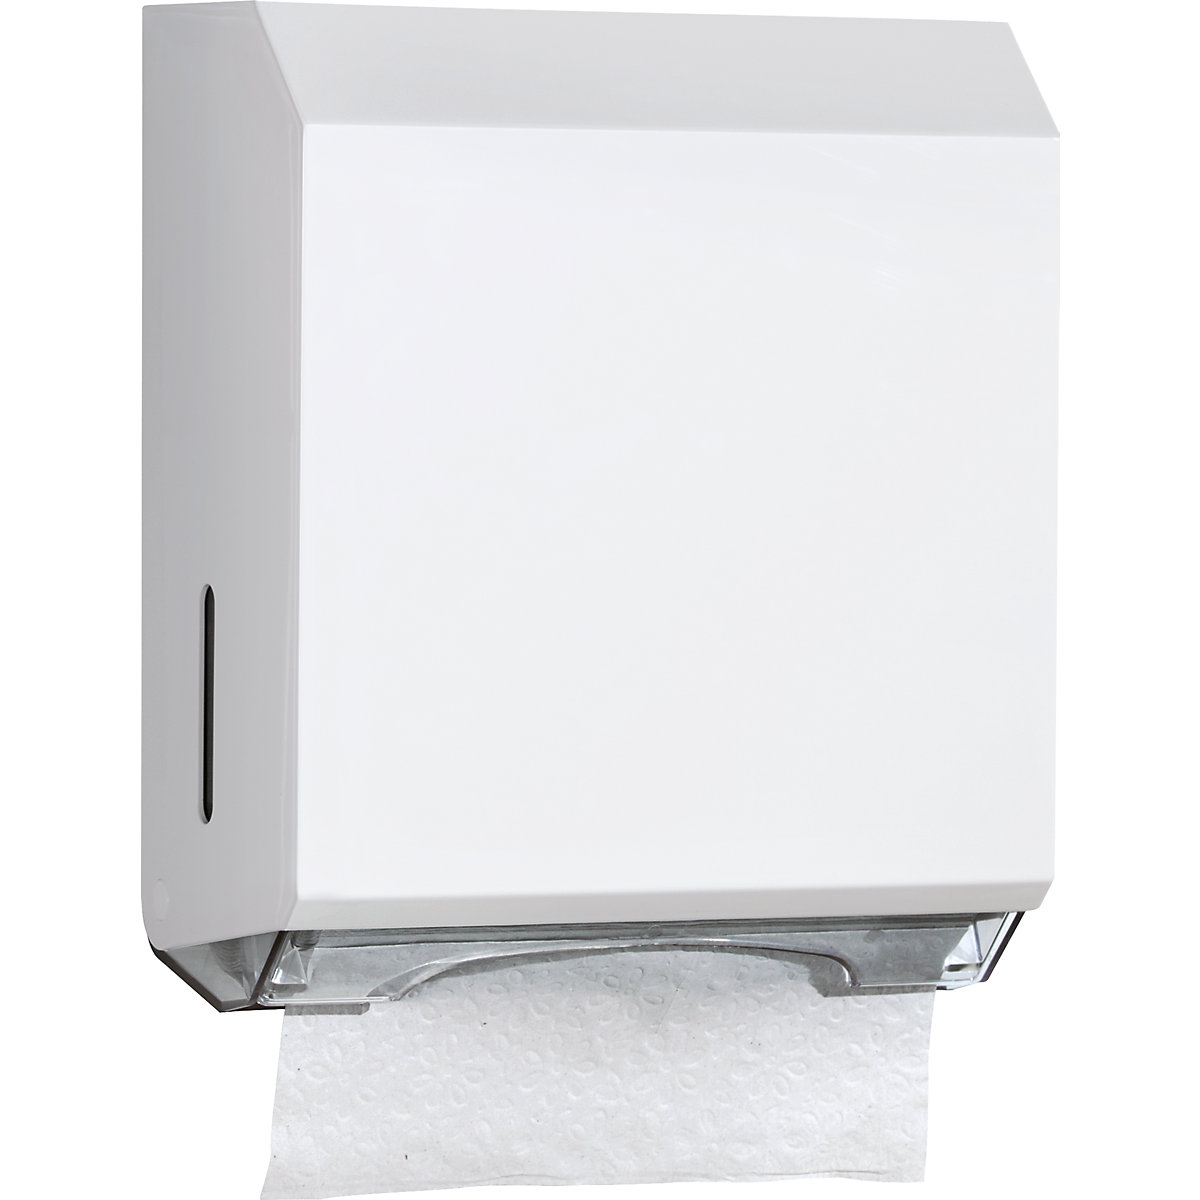 Dispensador de toalhetes de papel Novoclean, branco - CWS